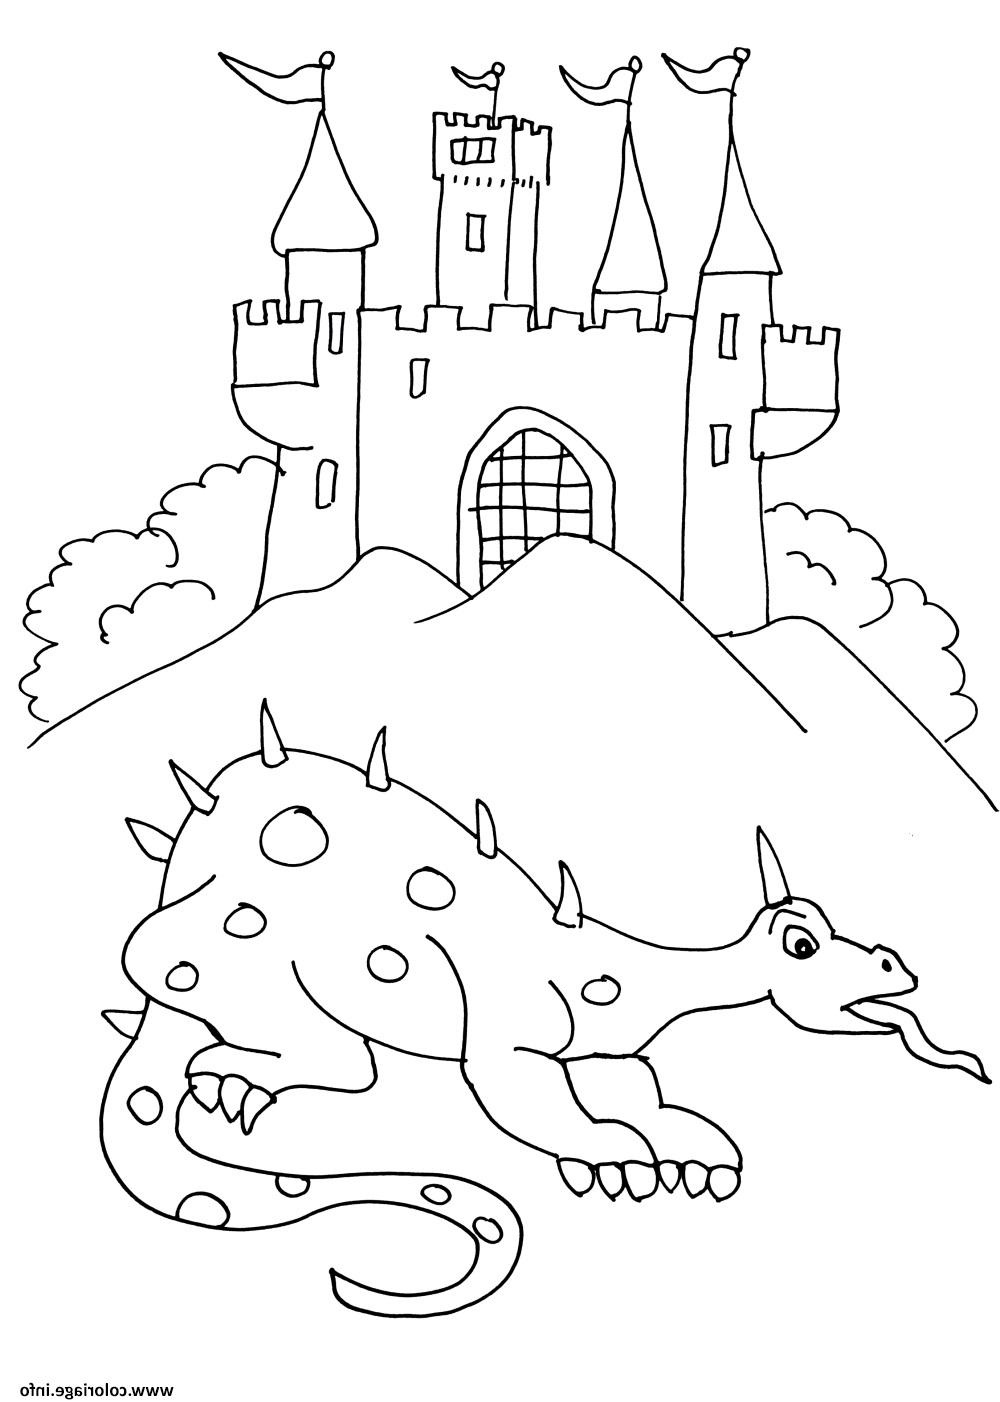 chateau de chevalier 8 coloriage dessin